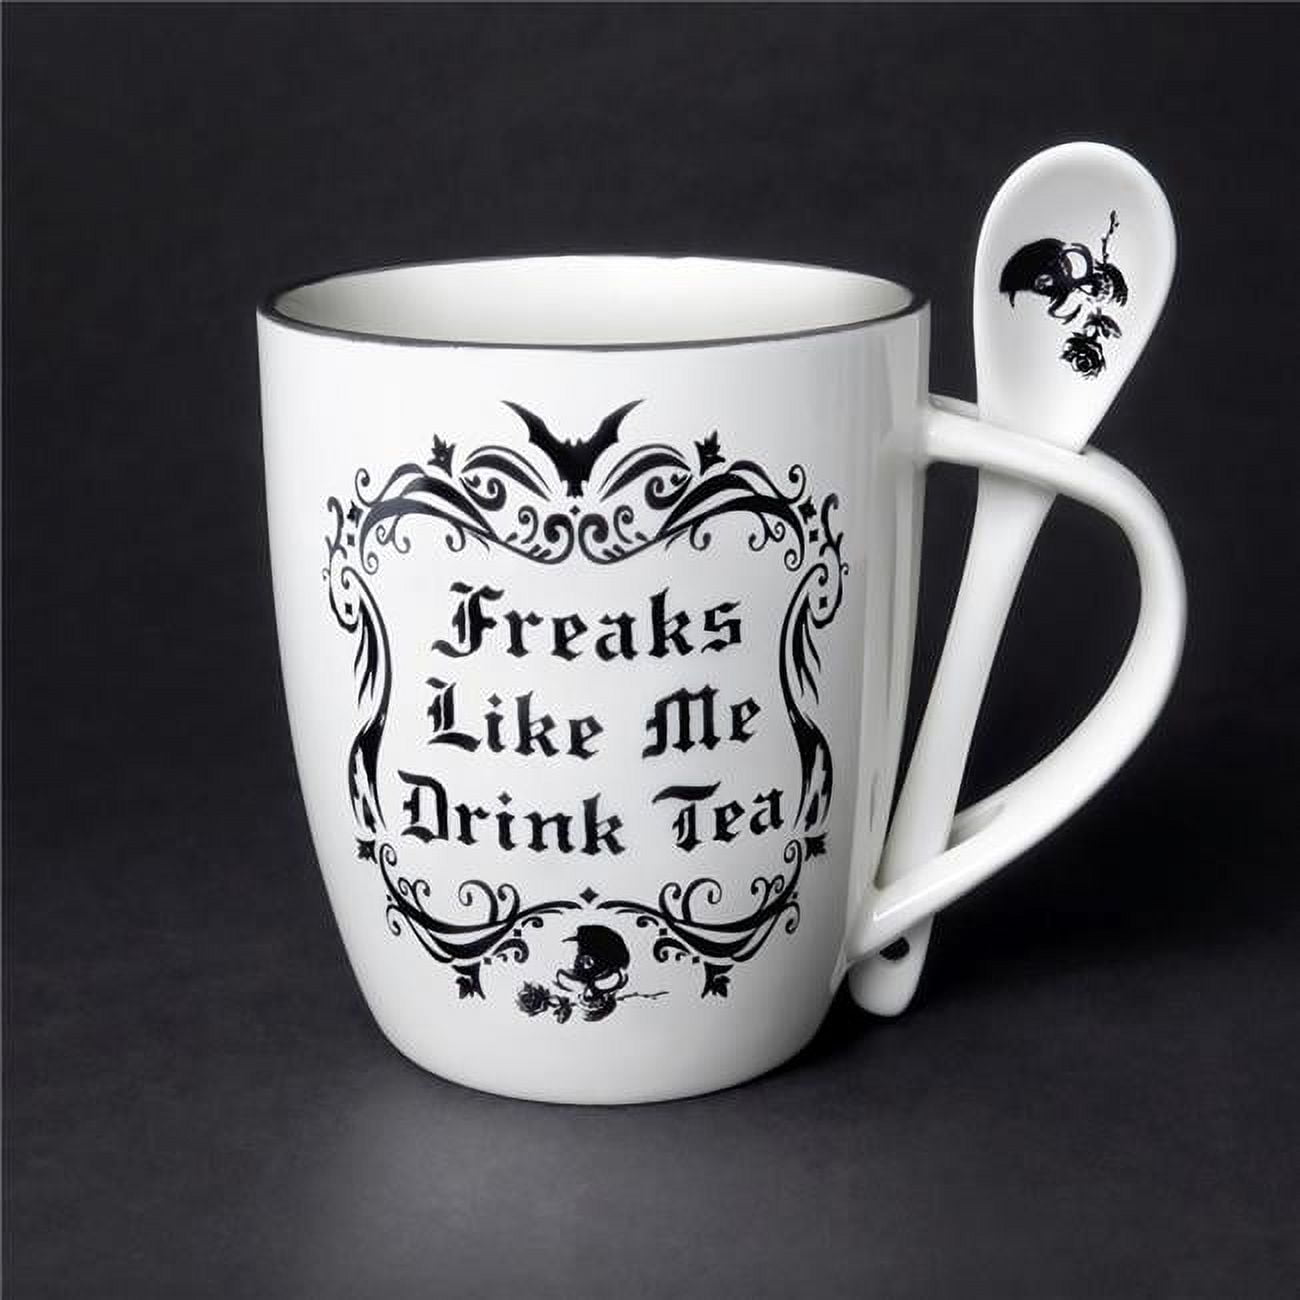 Picture of Alchemy Gothic ALMUG19 5.31 in. Freaks Like me Drink Tea Mug Spoon Set&#44; White & Black - 13 oz